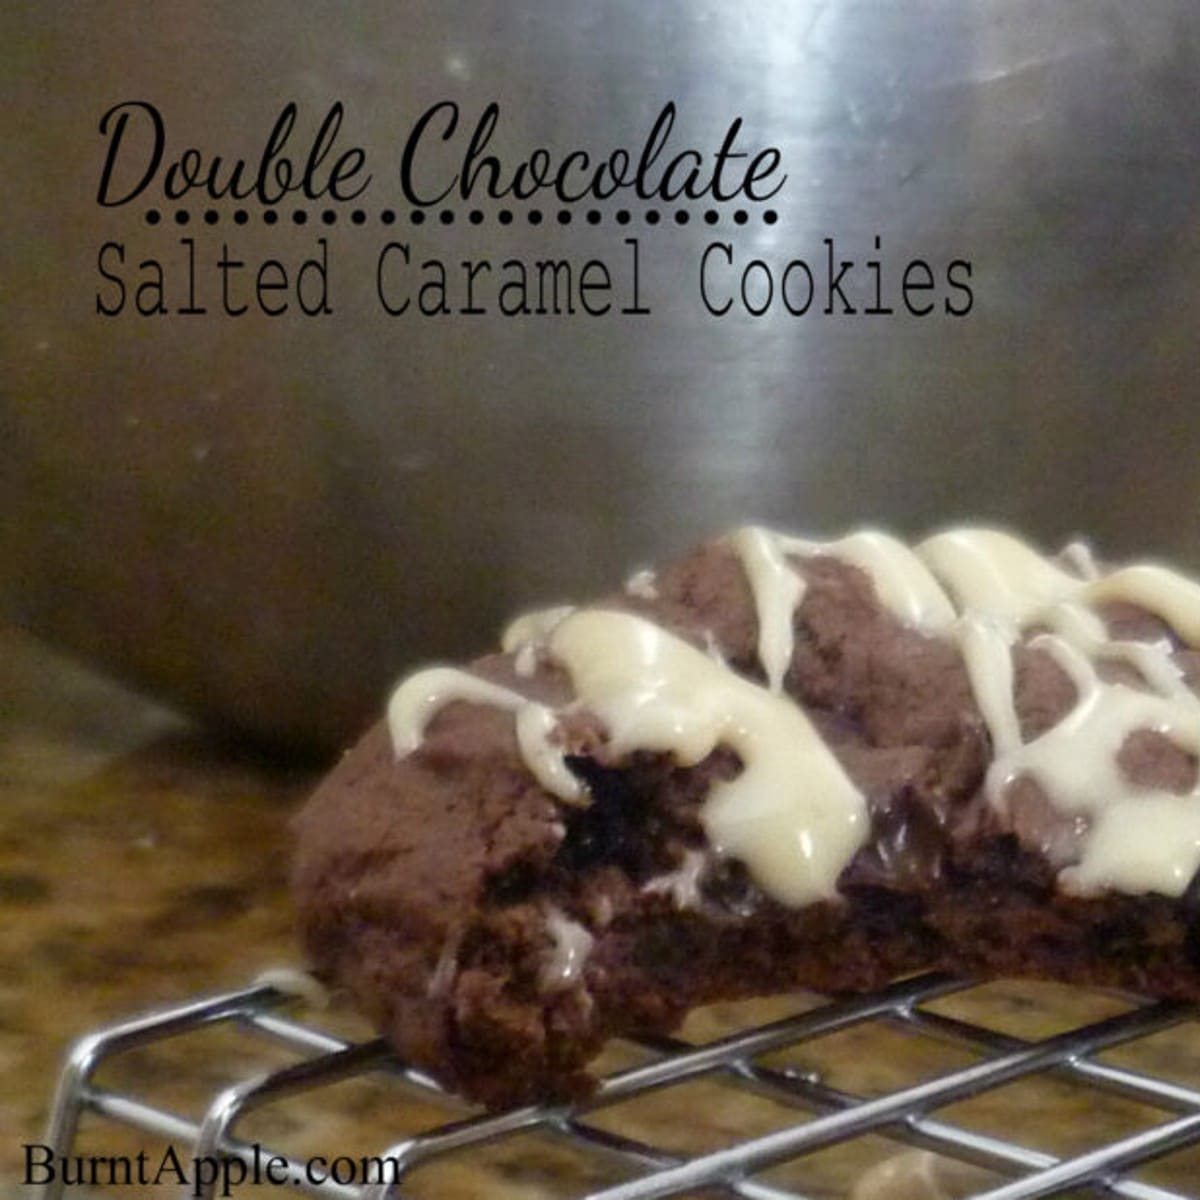  chocolate salted caramel cookies with a salted caramel glaze.